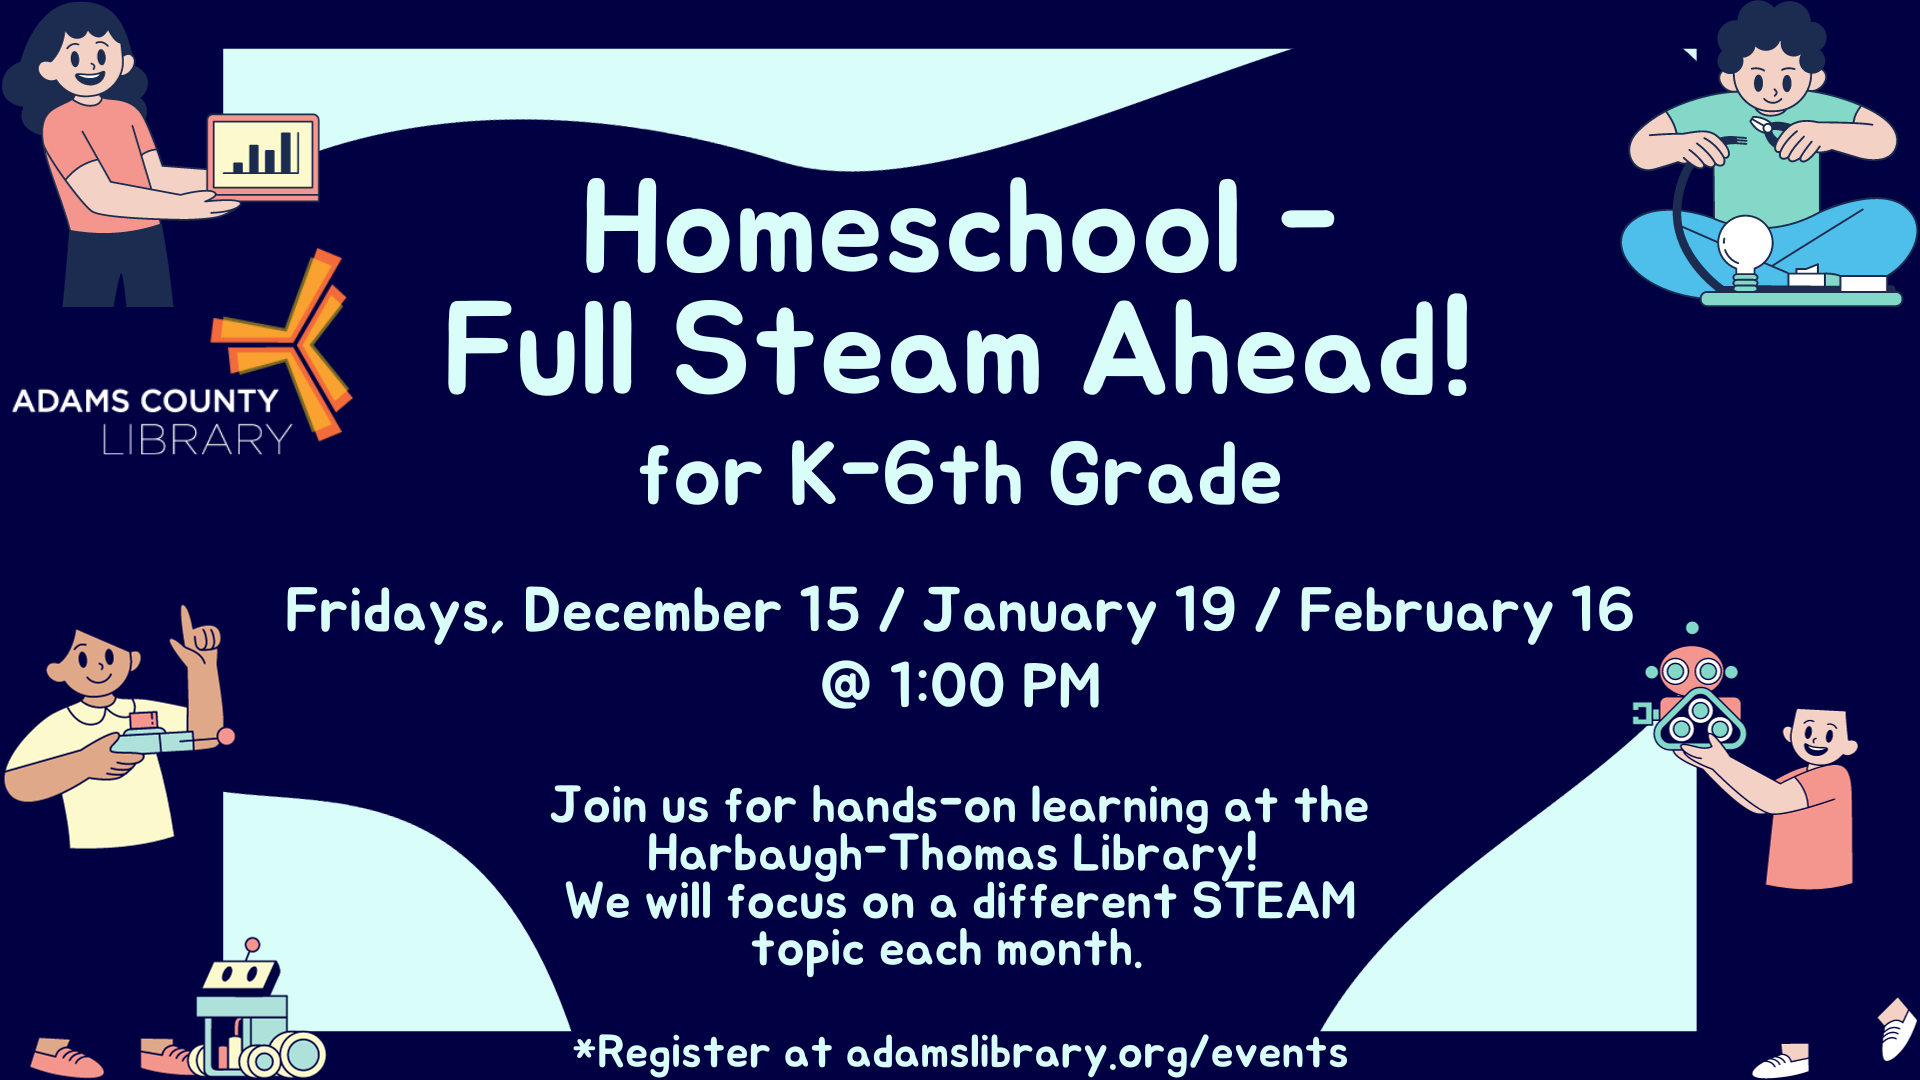 Homeschool - Full Steam Ahead! for K-6th Grade